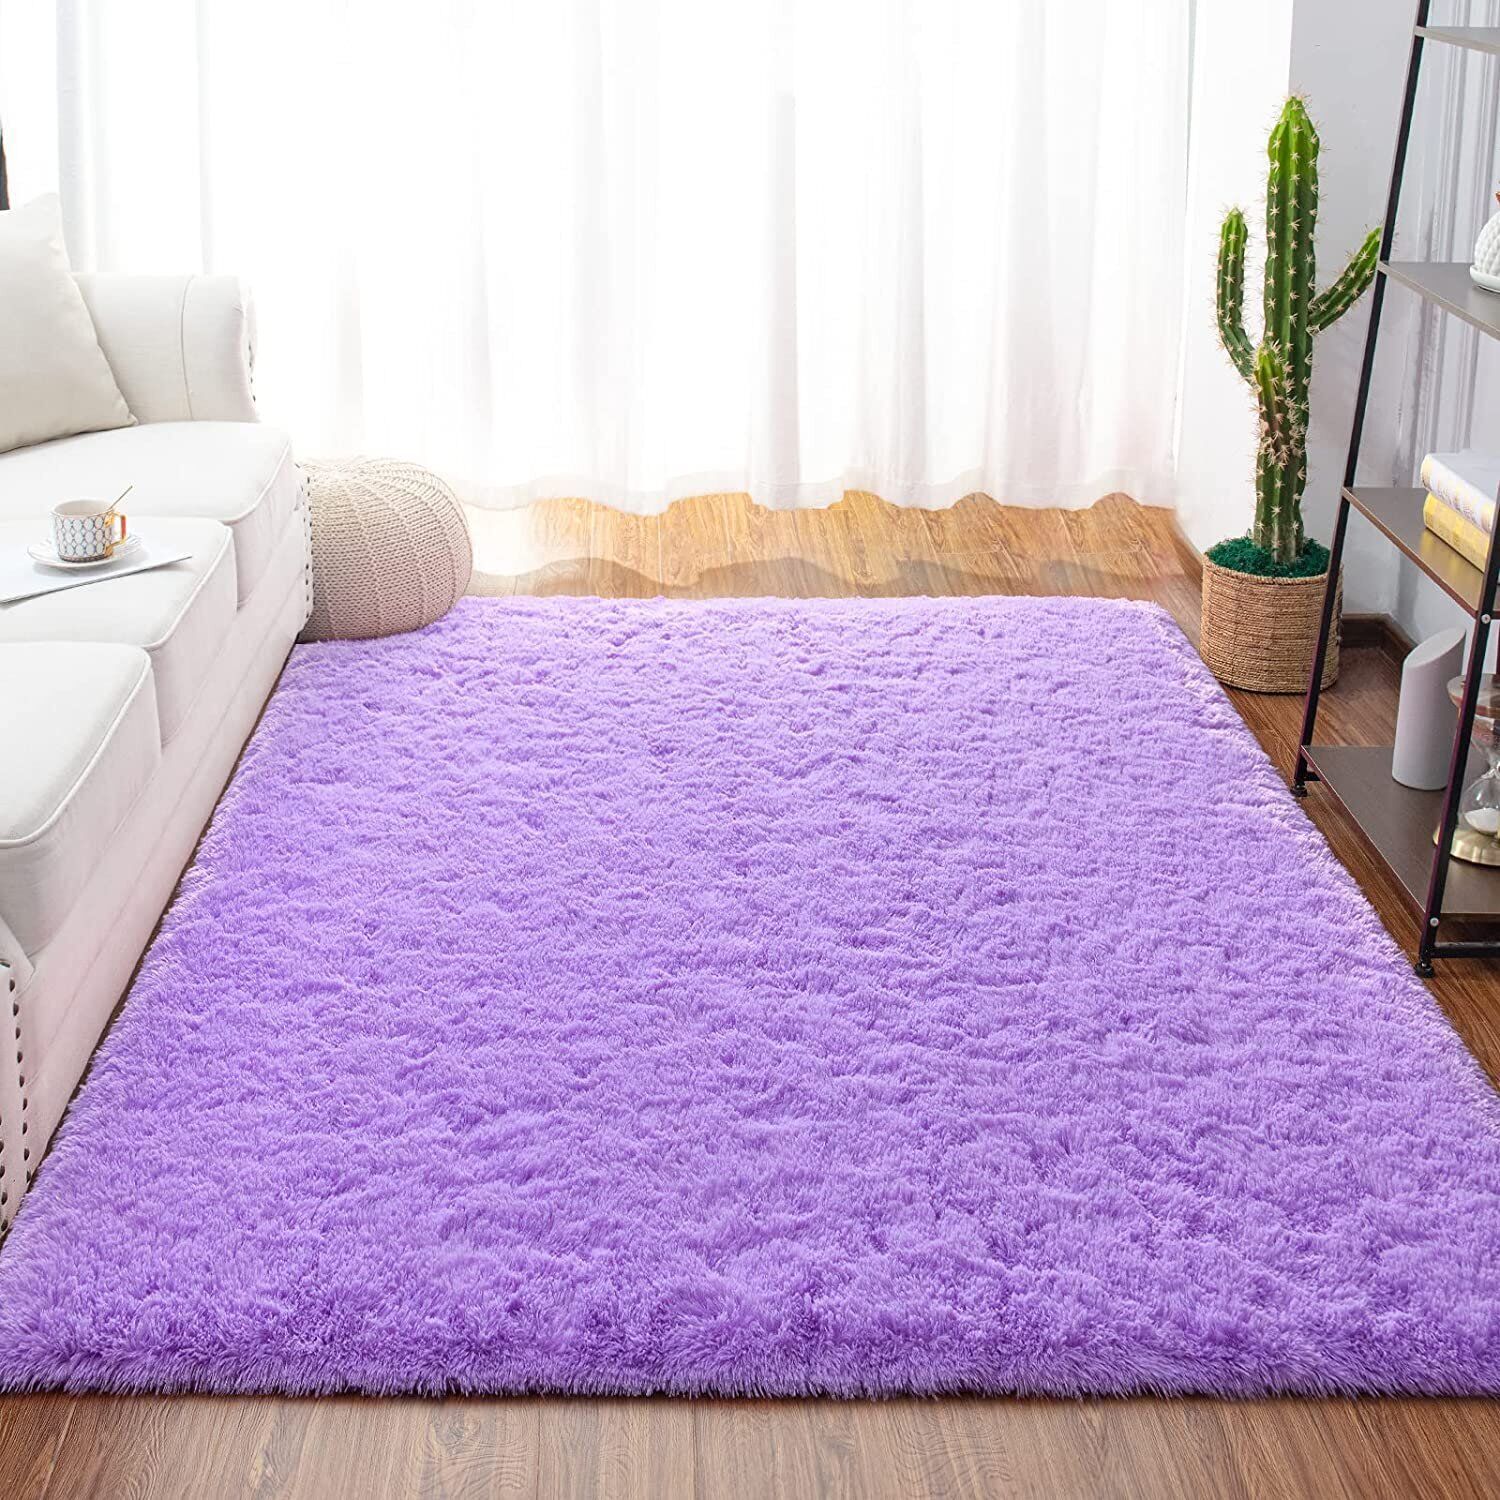 Solid Purple Shag Carpet Area Rug Indoor Mat Faux Fur 4 X 5.3 X  (View 10 of 15)